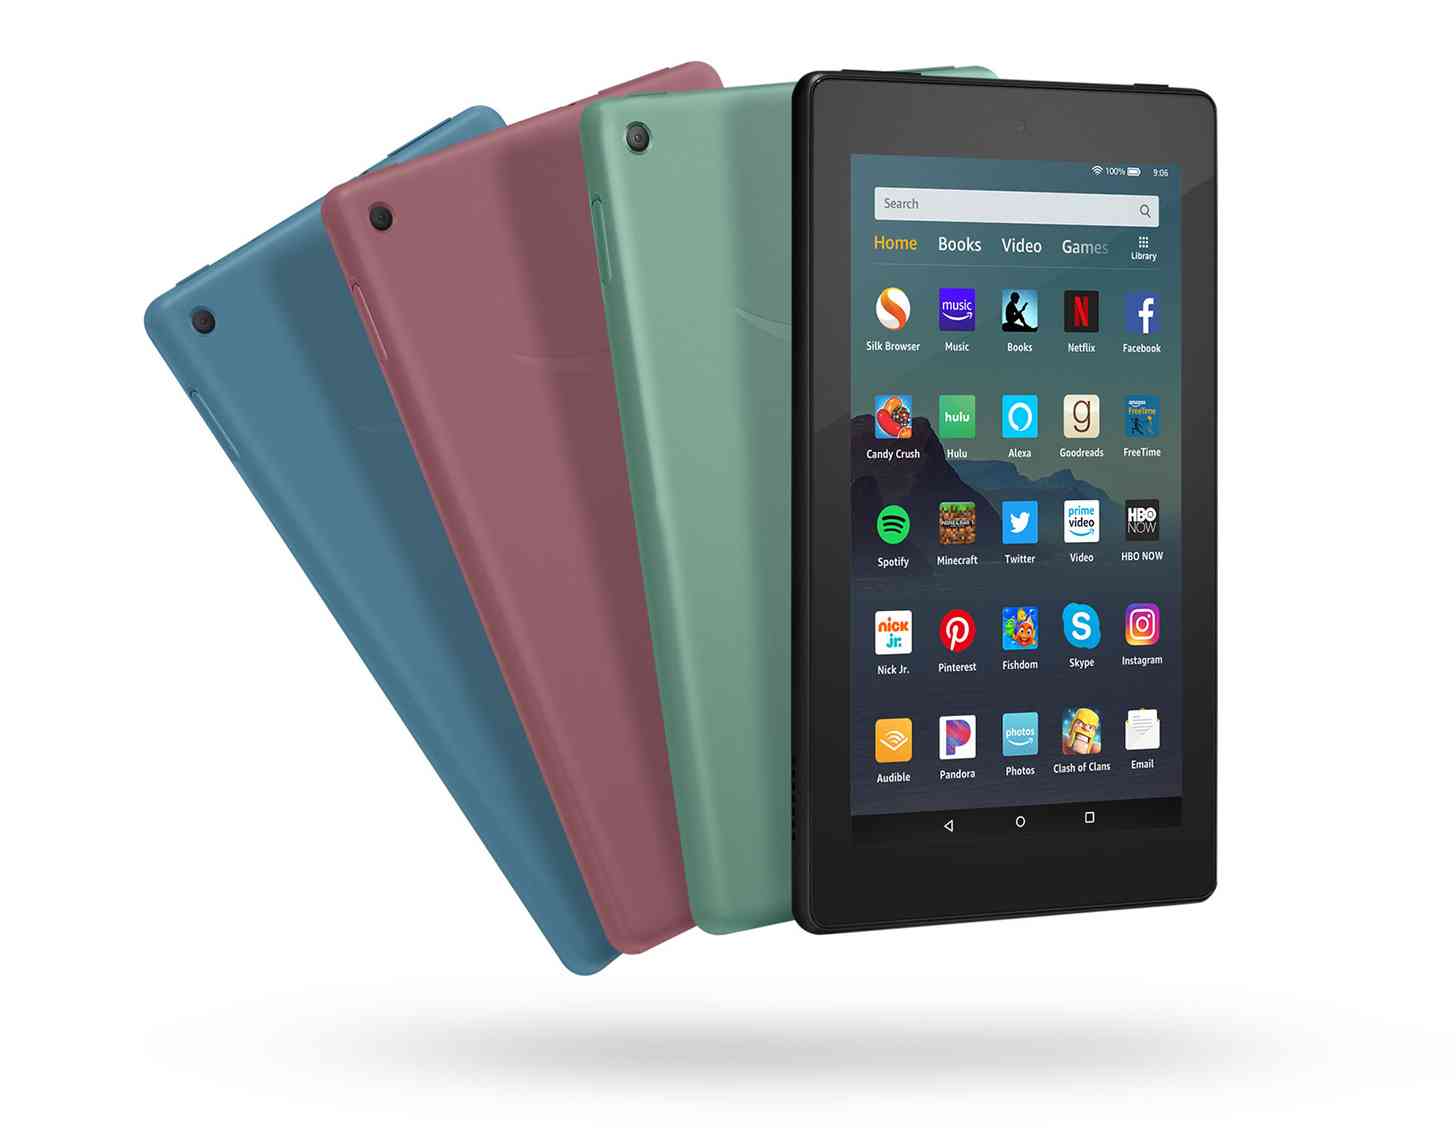 Amazon Fire 7 Tablet colors